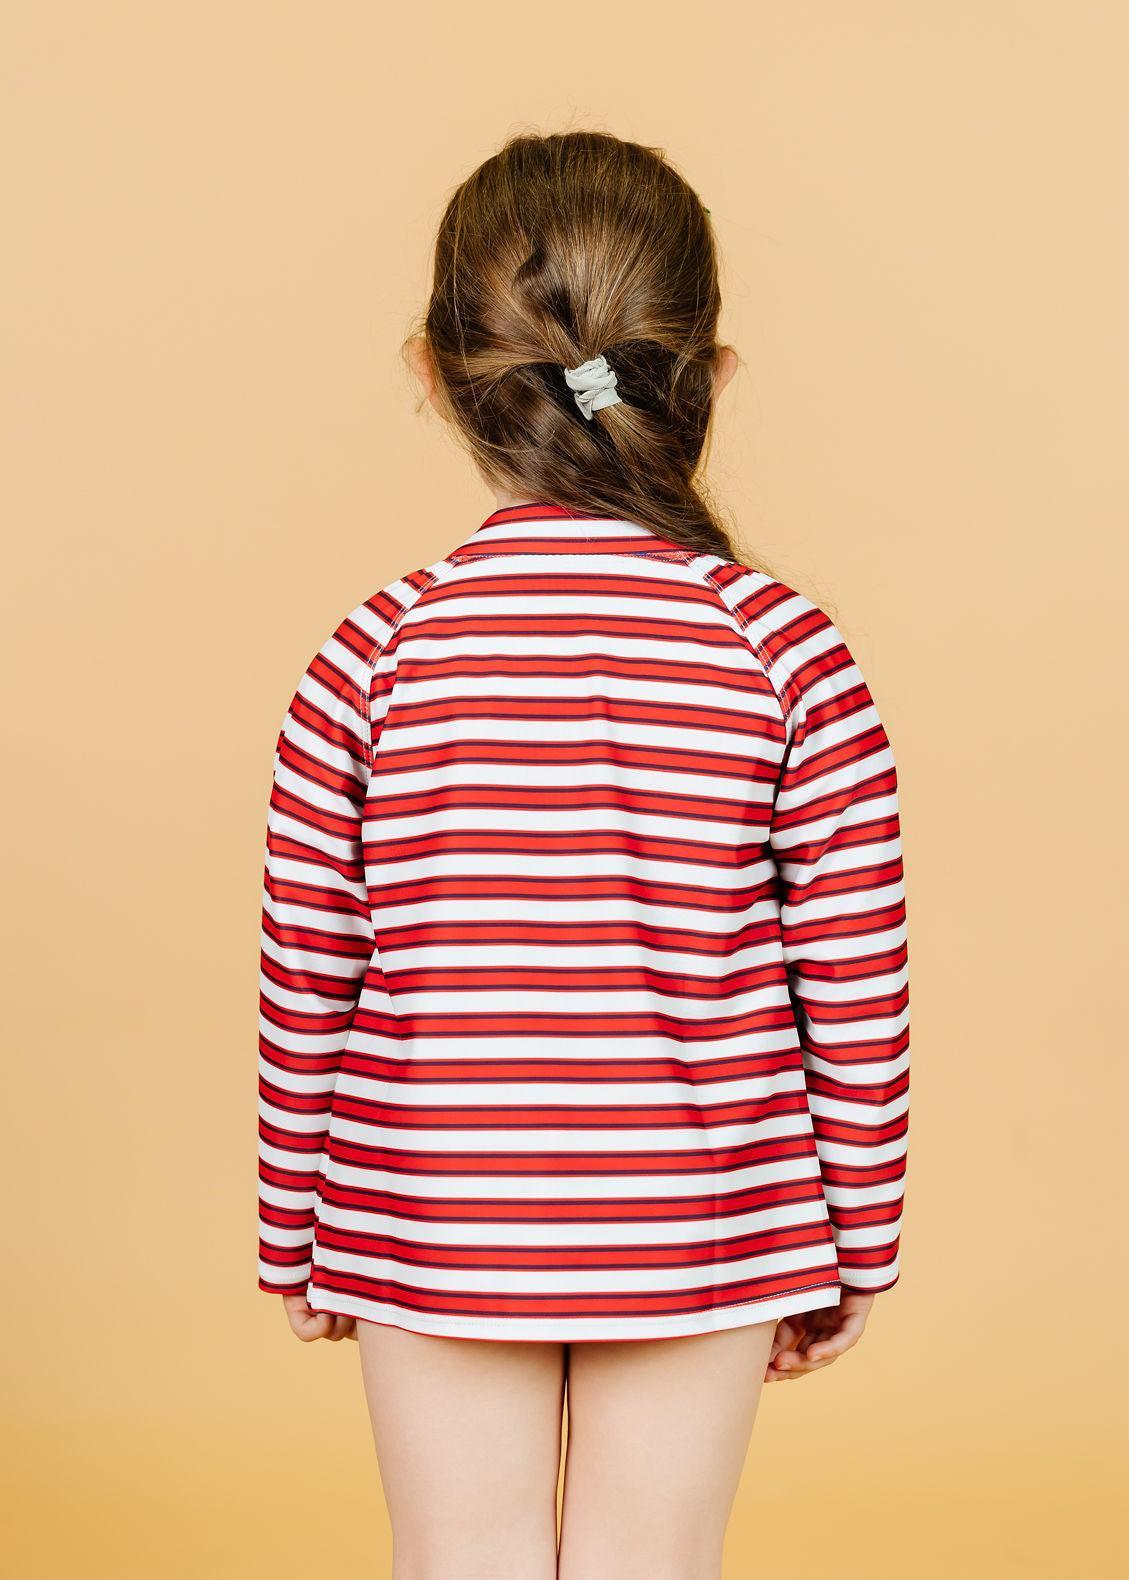 Girl/Boy Swimsuit Rashguard Top - Red + Navy Stripes